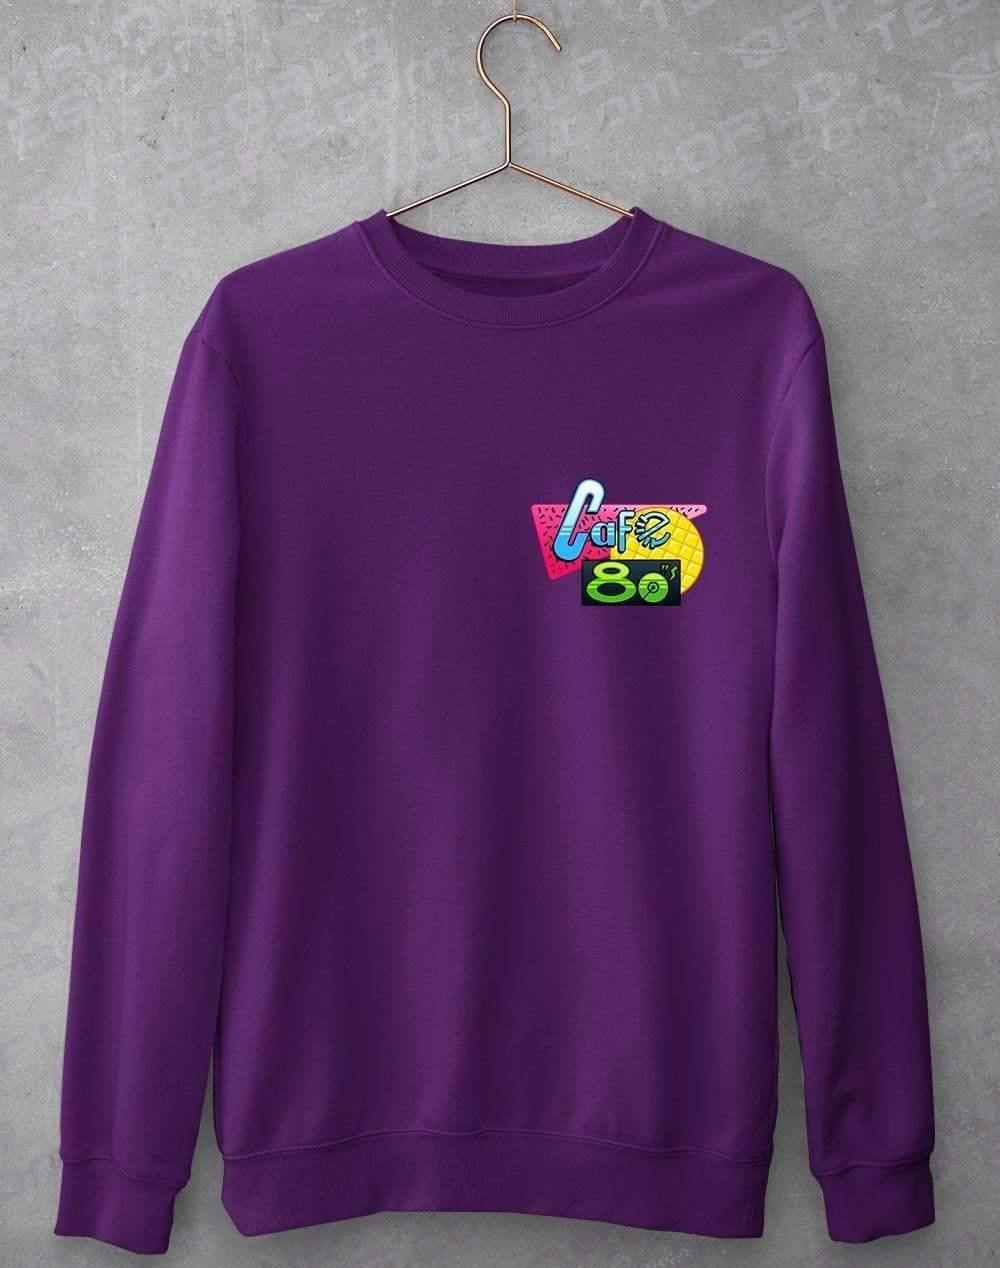 Cafe 80s Pocket Print Sweatshirt S / Purple  - Off World Tees